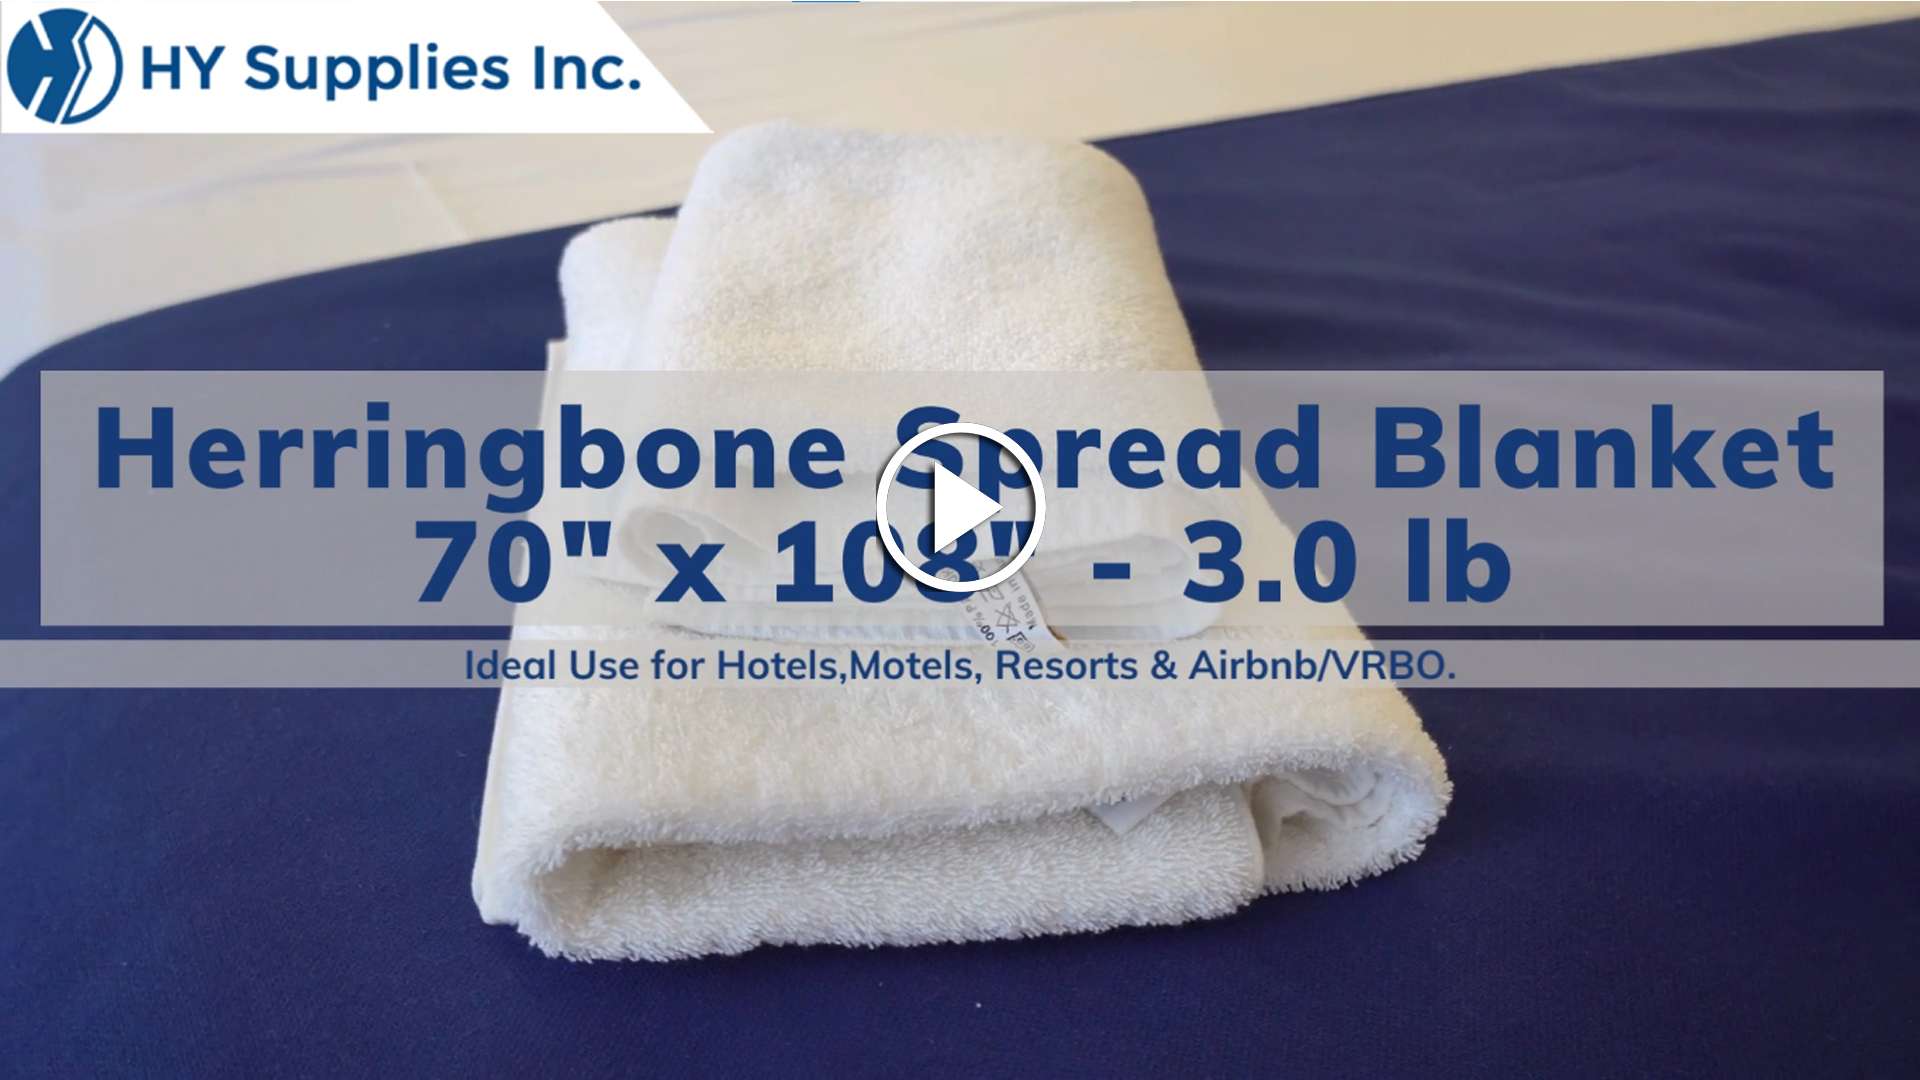 Herringbone Spread Blanket - 70" x 108" - 3.0 lb